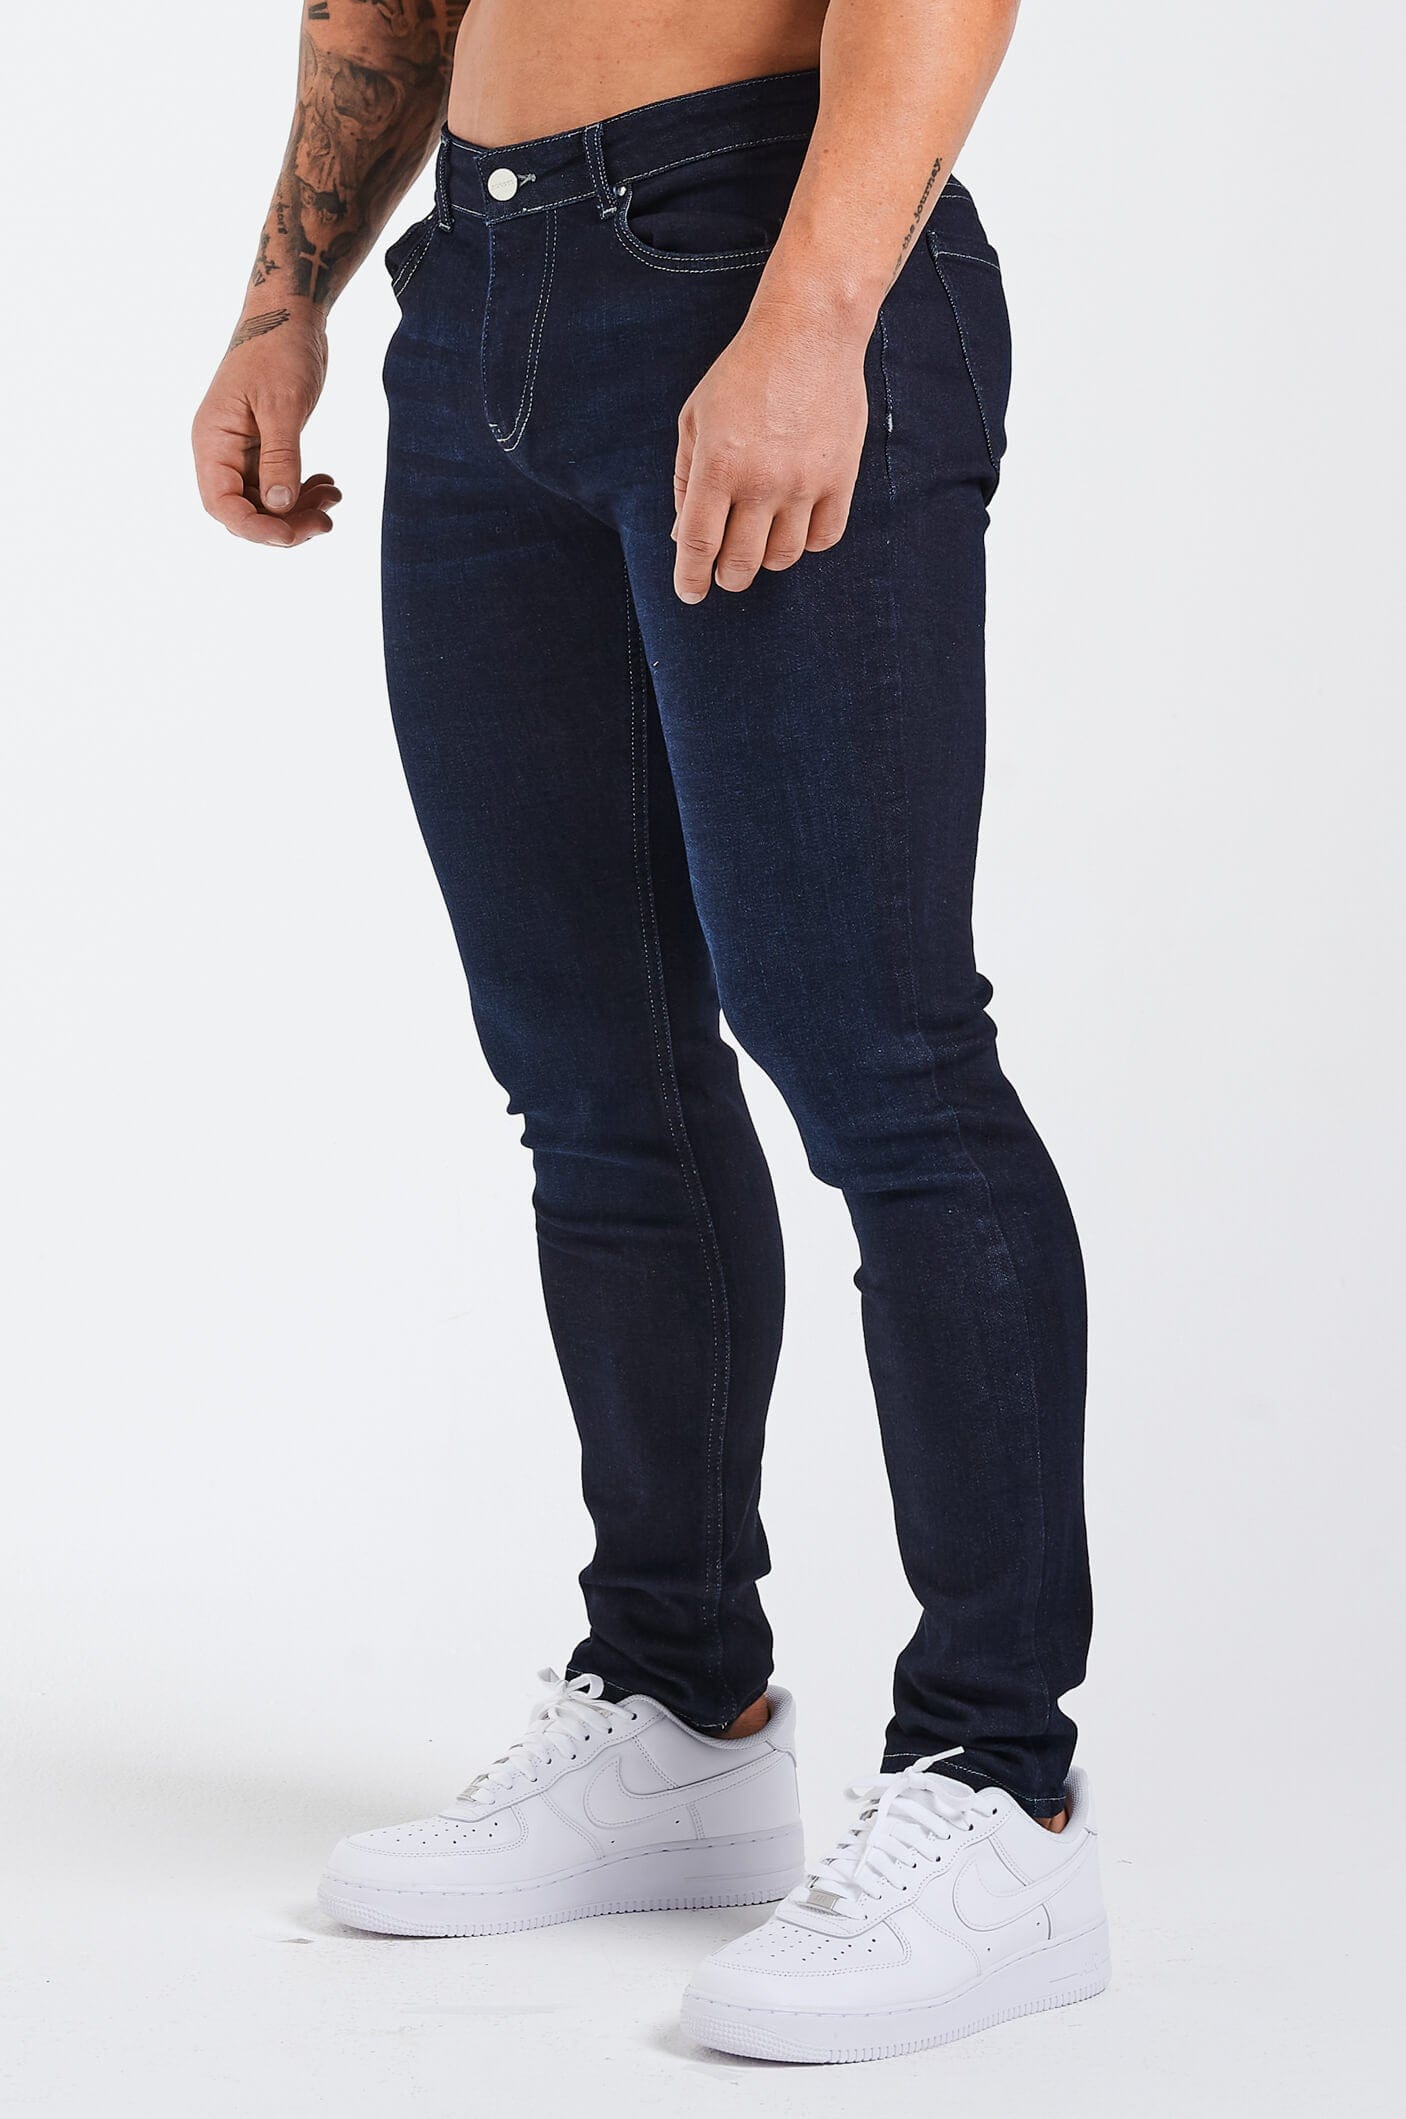 Legend London Jeans - slim 2.0 SLIM FIT JEANS 2.0 - RAW INDIGO